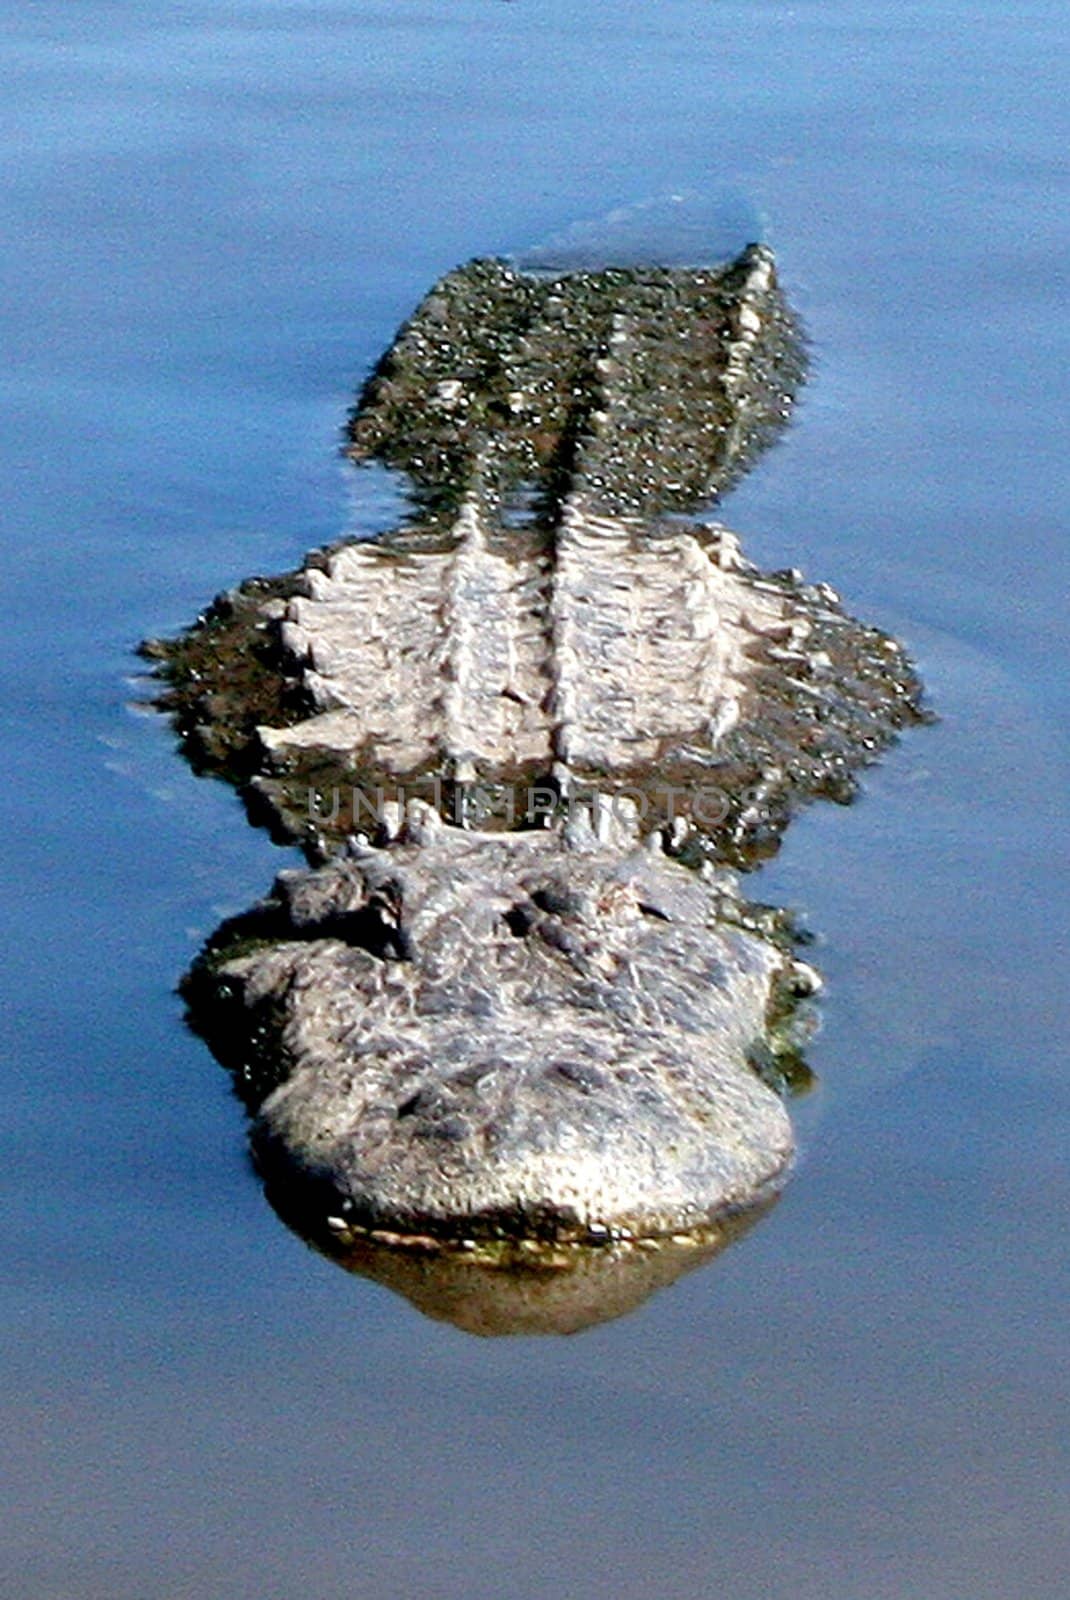 Alligator by quackersnaps